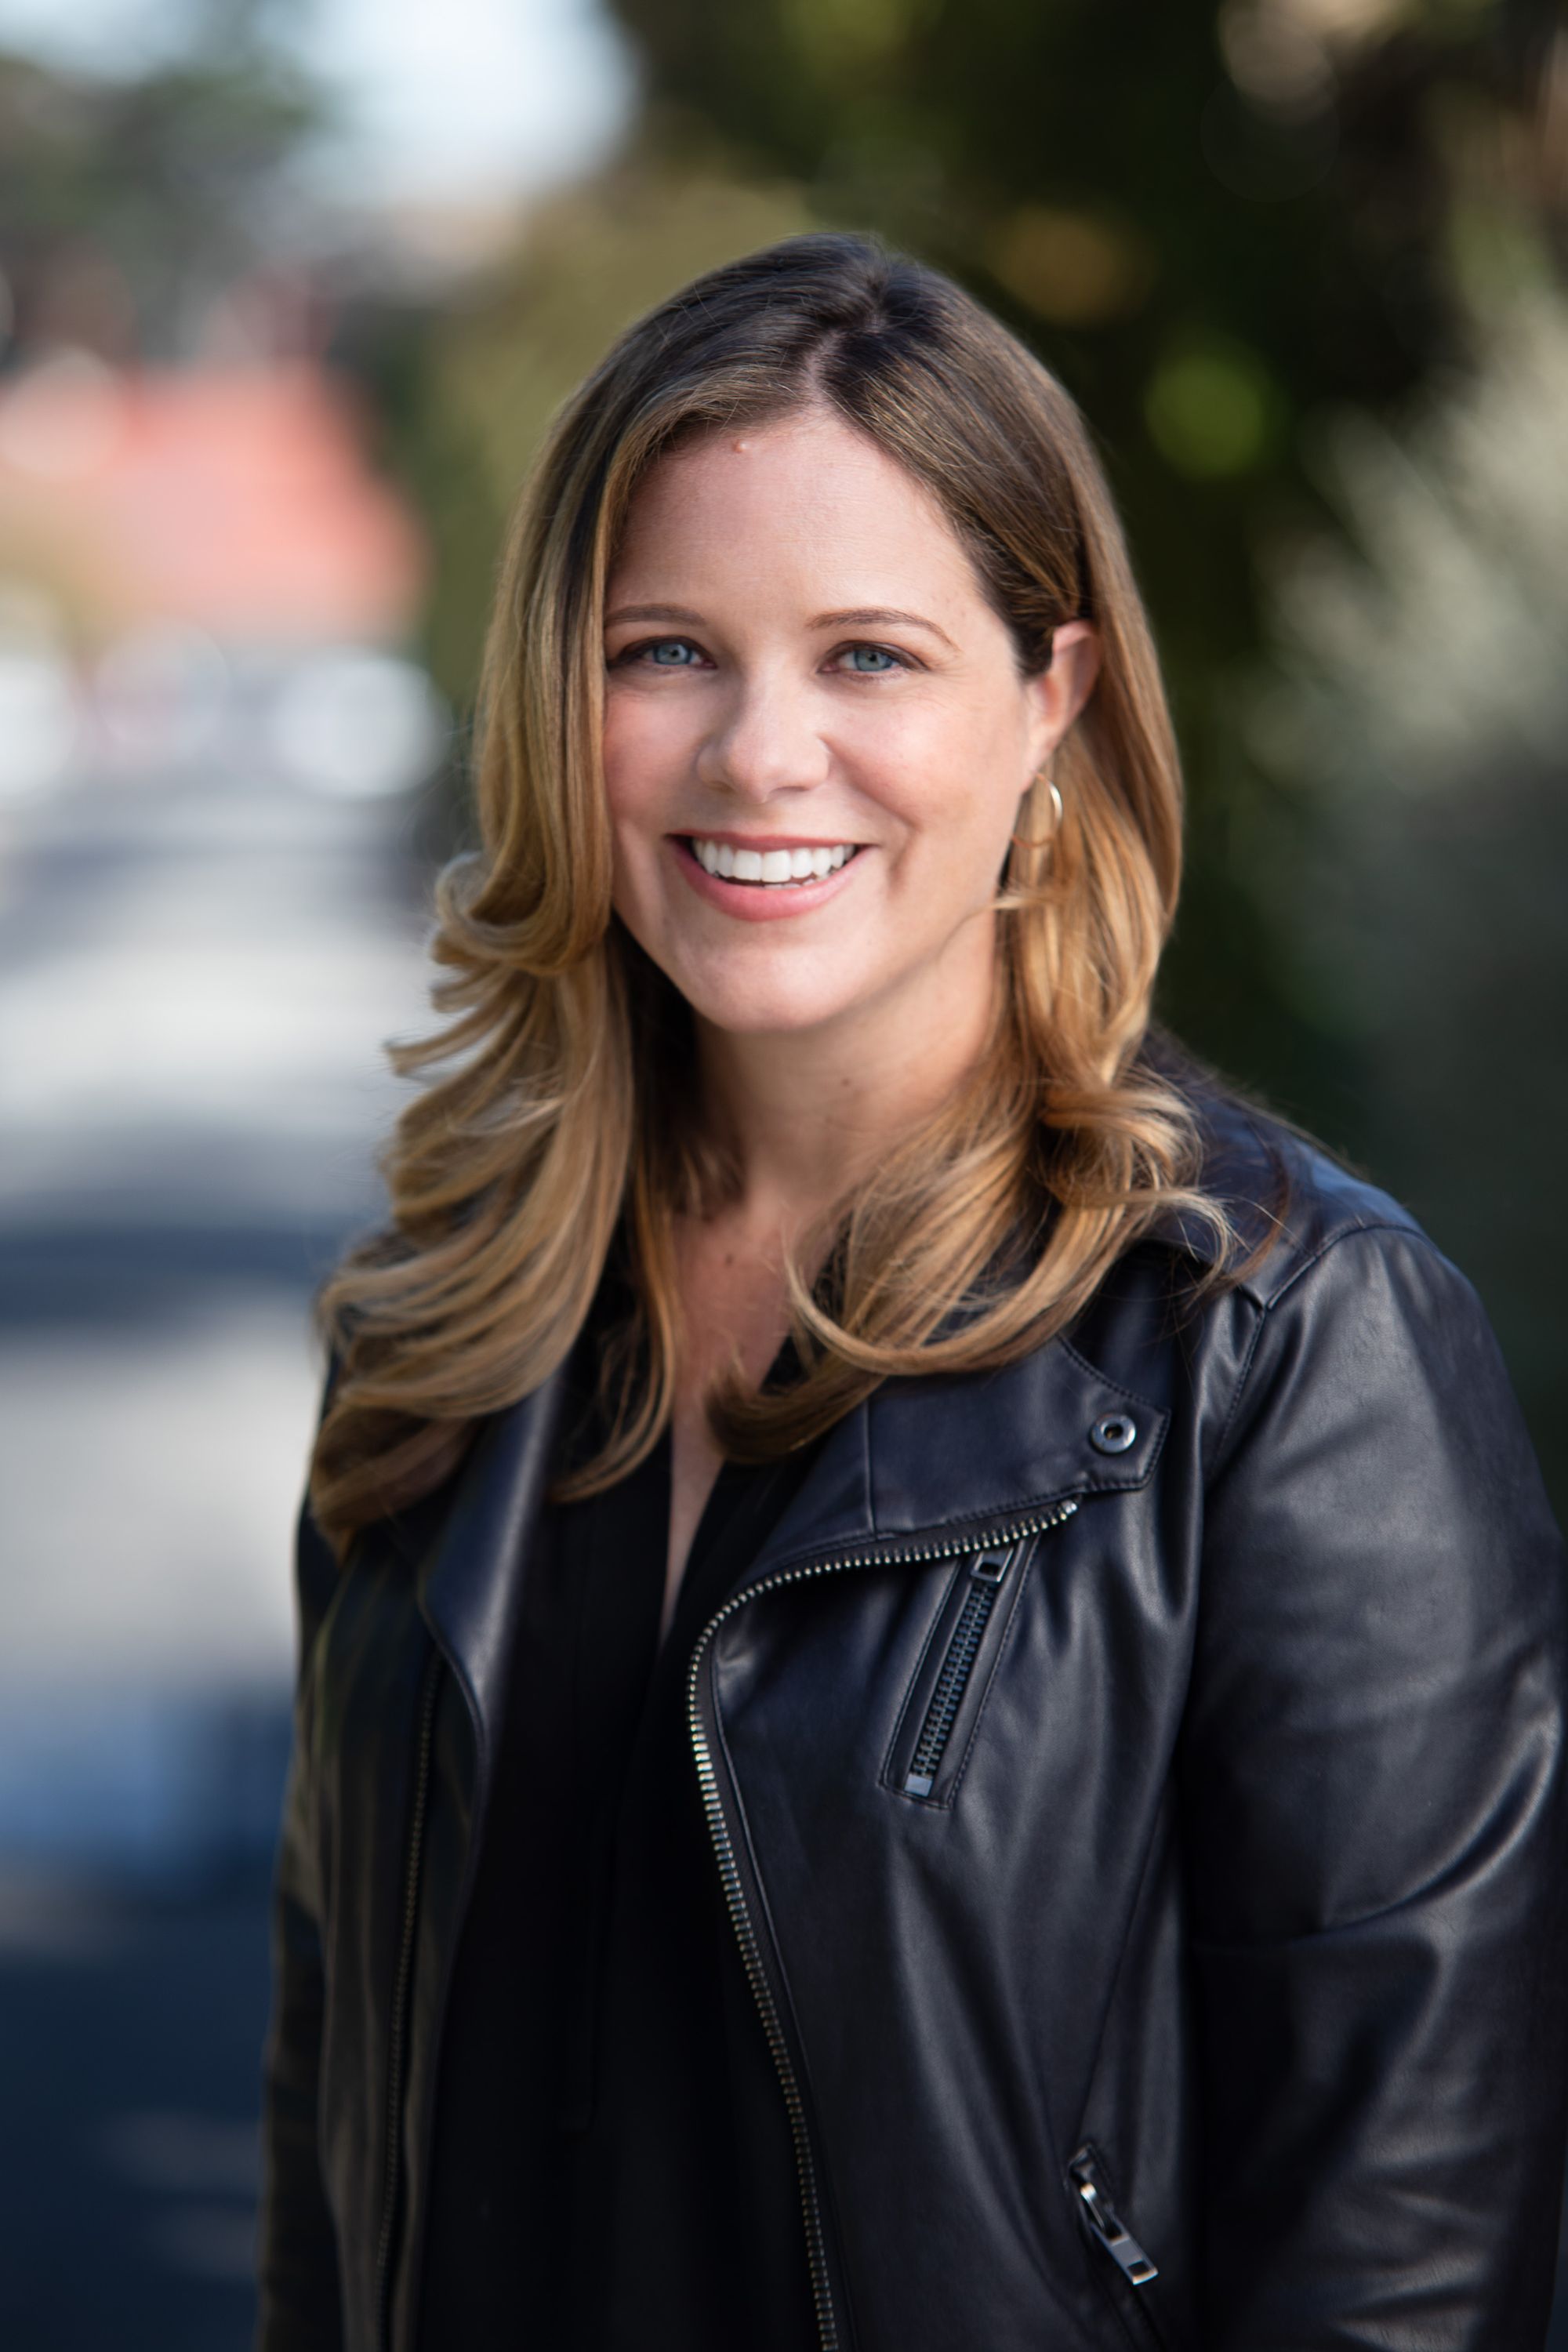 Shannon Farley, Co-Founder & Executive Director of Fast Forward